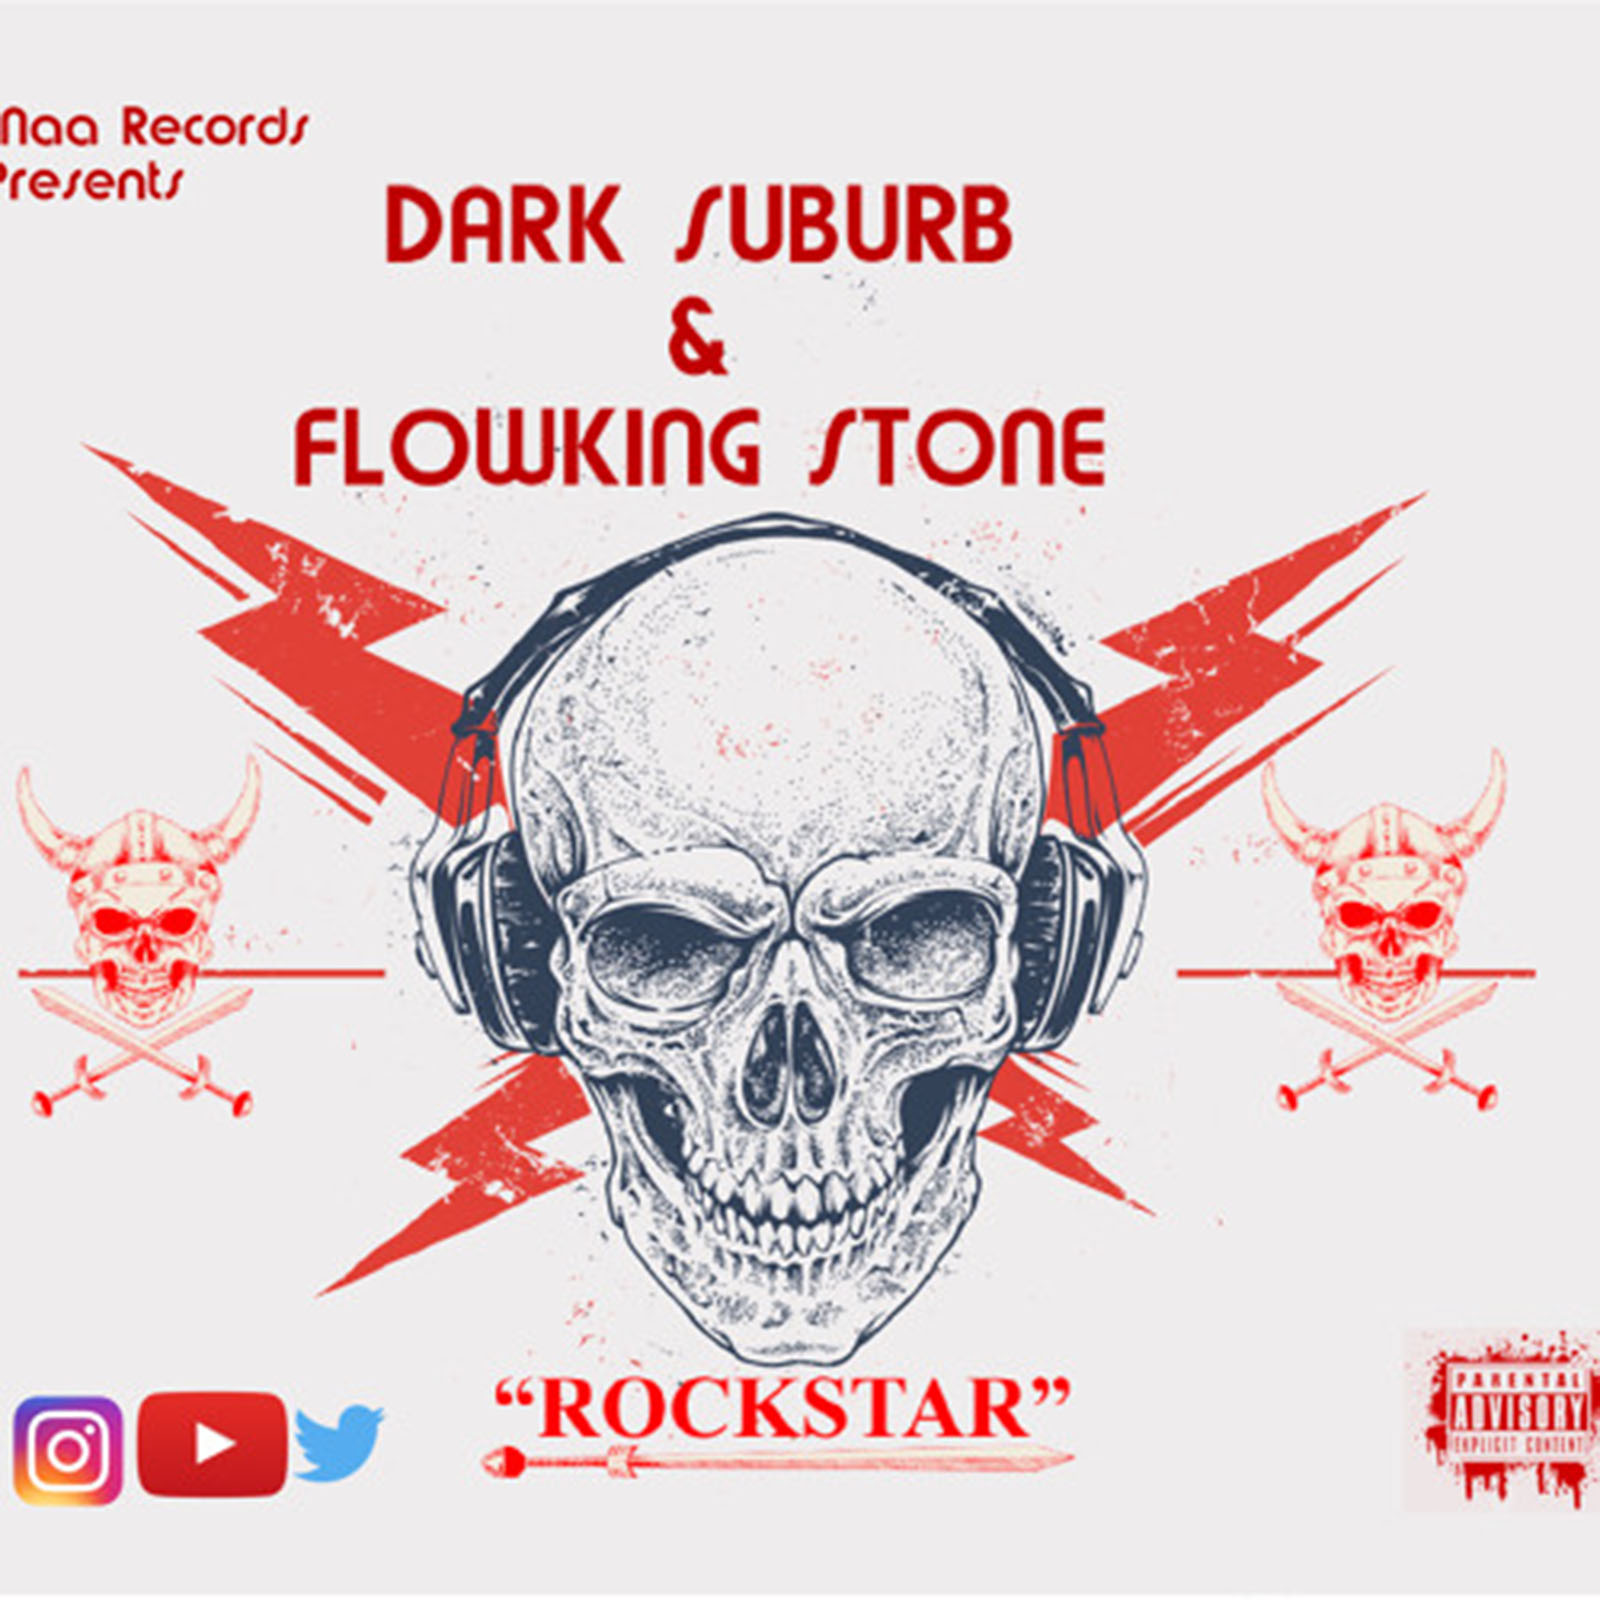 Rockstar by Dark Suburb feat. Flowking Stone